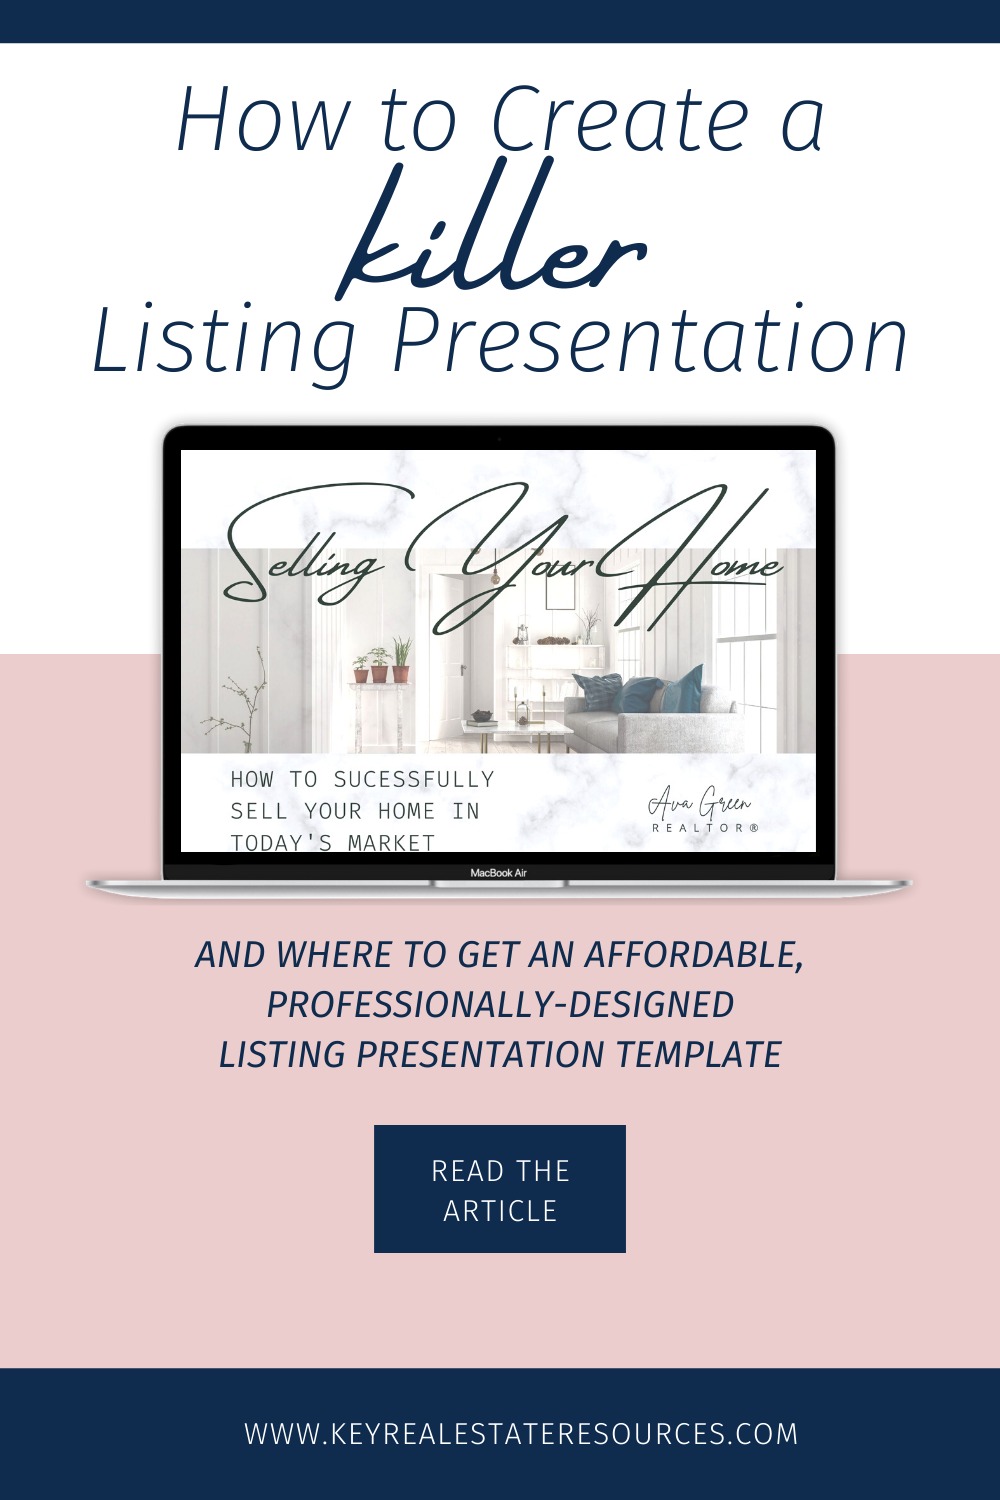 a listing presentation manual should include